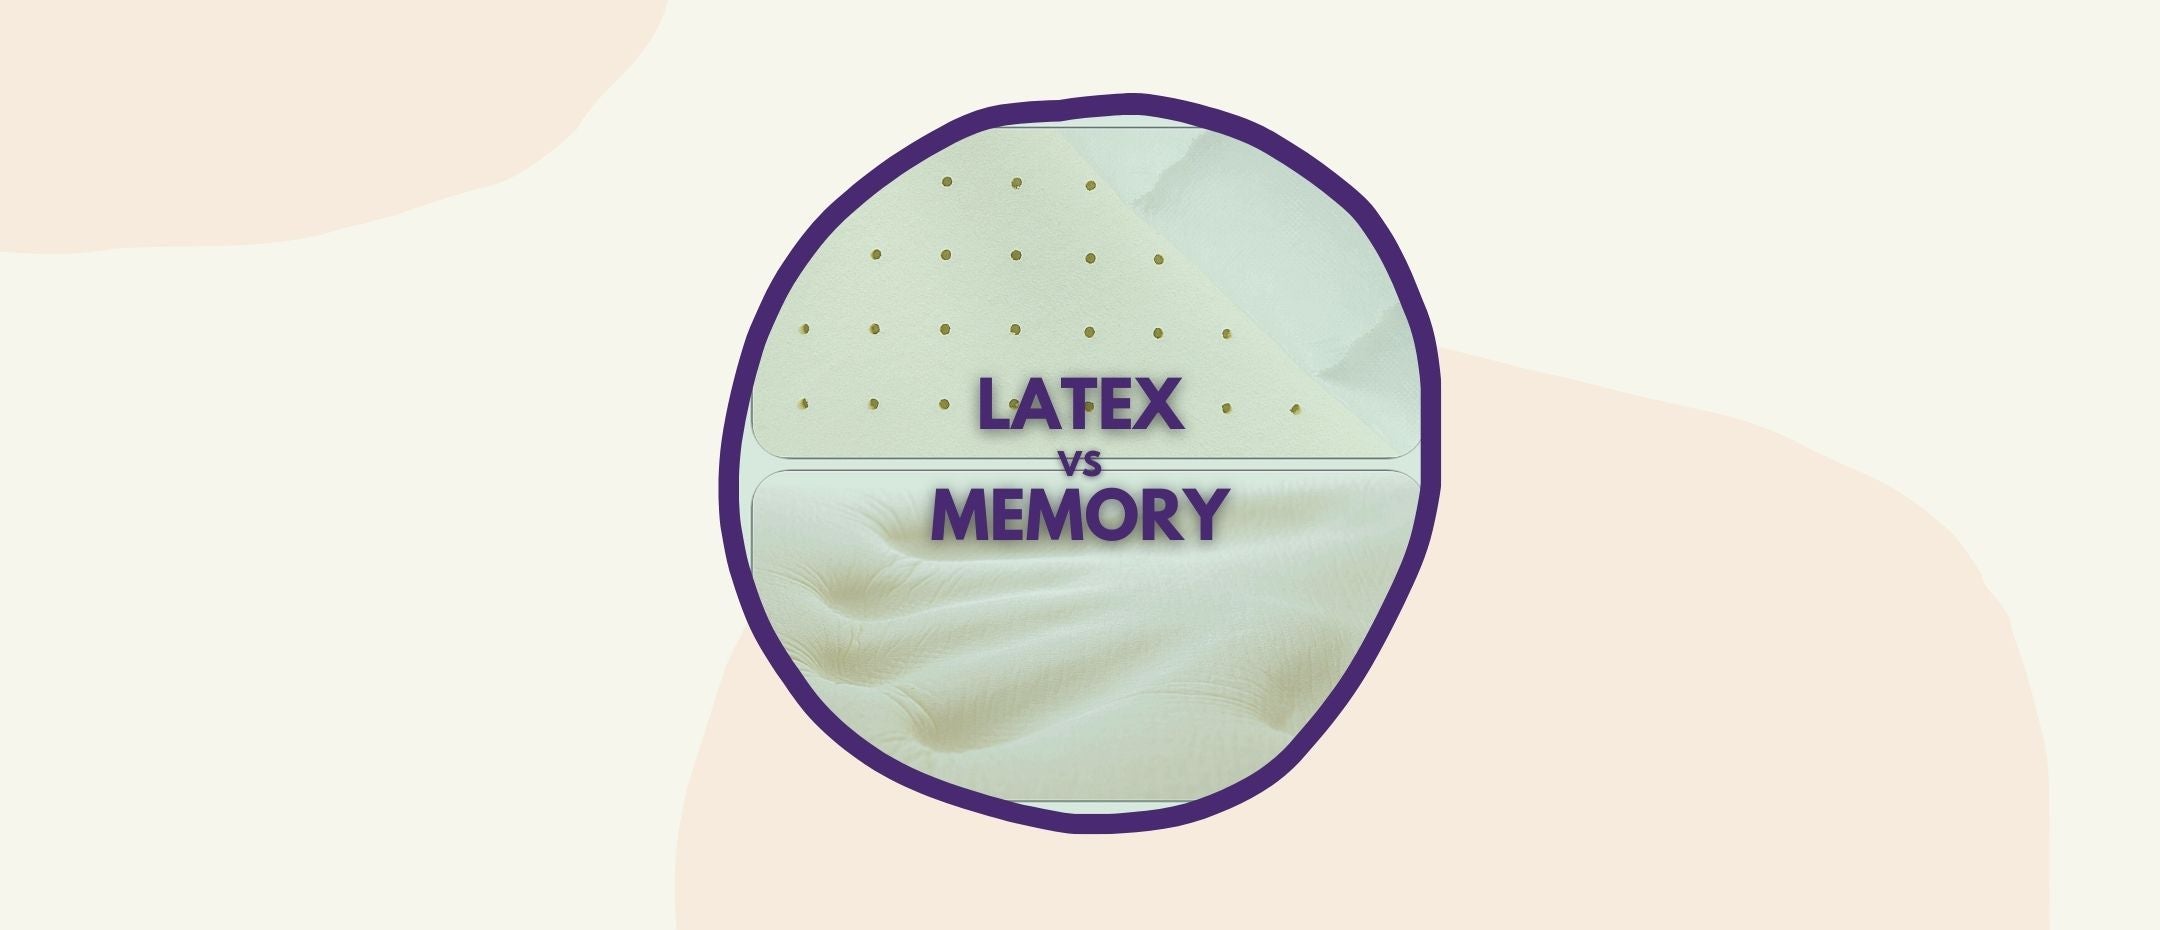 Latex mattress component facing memory foam